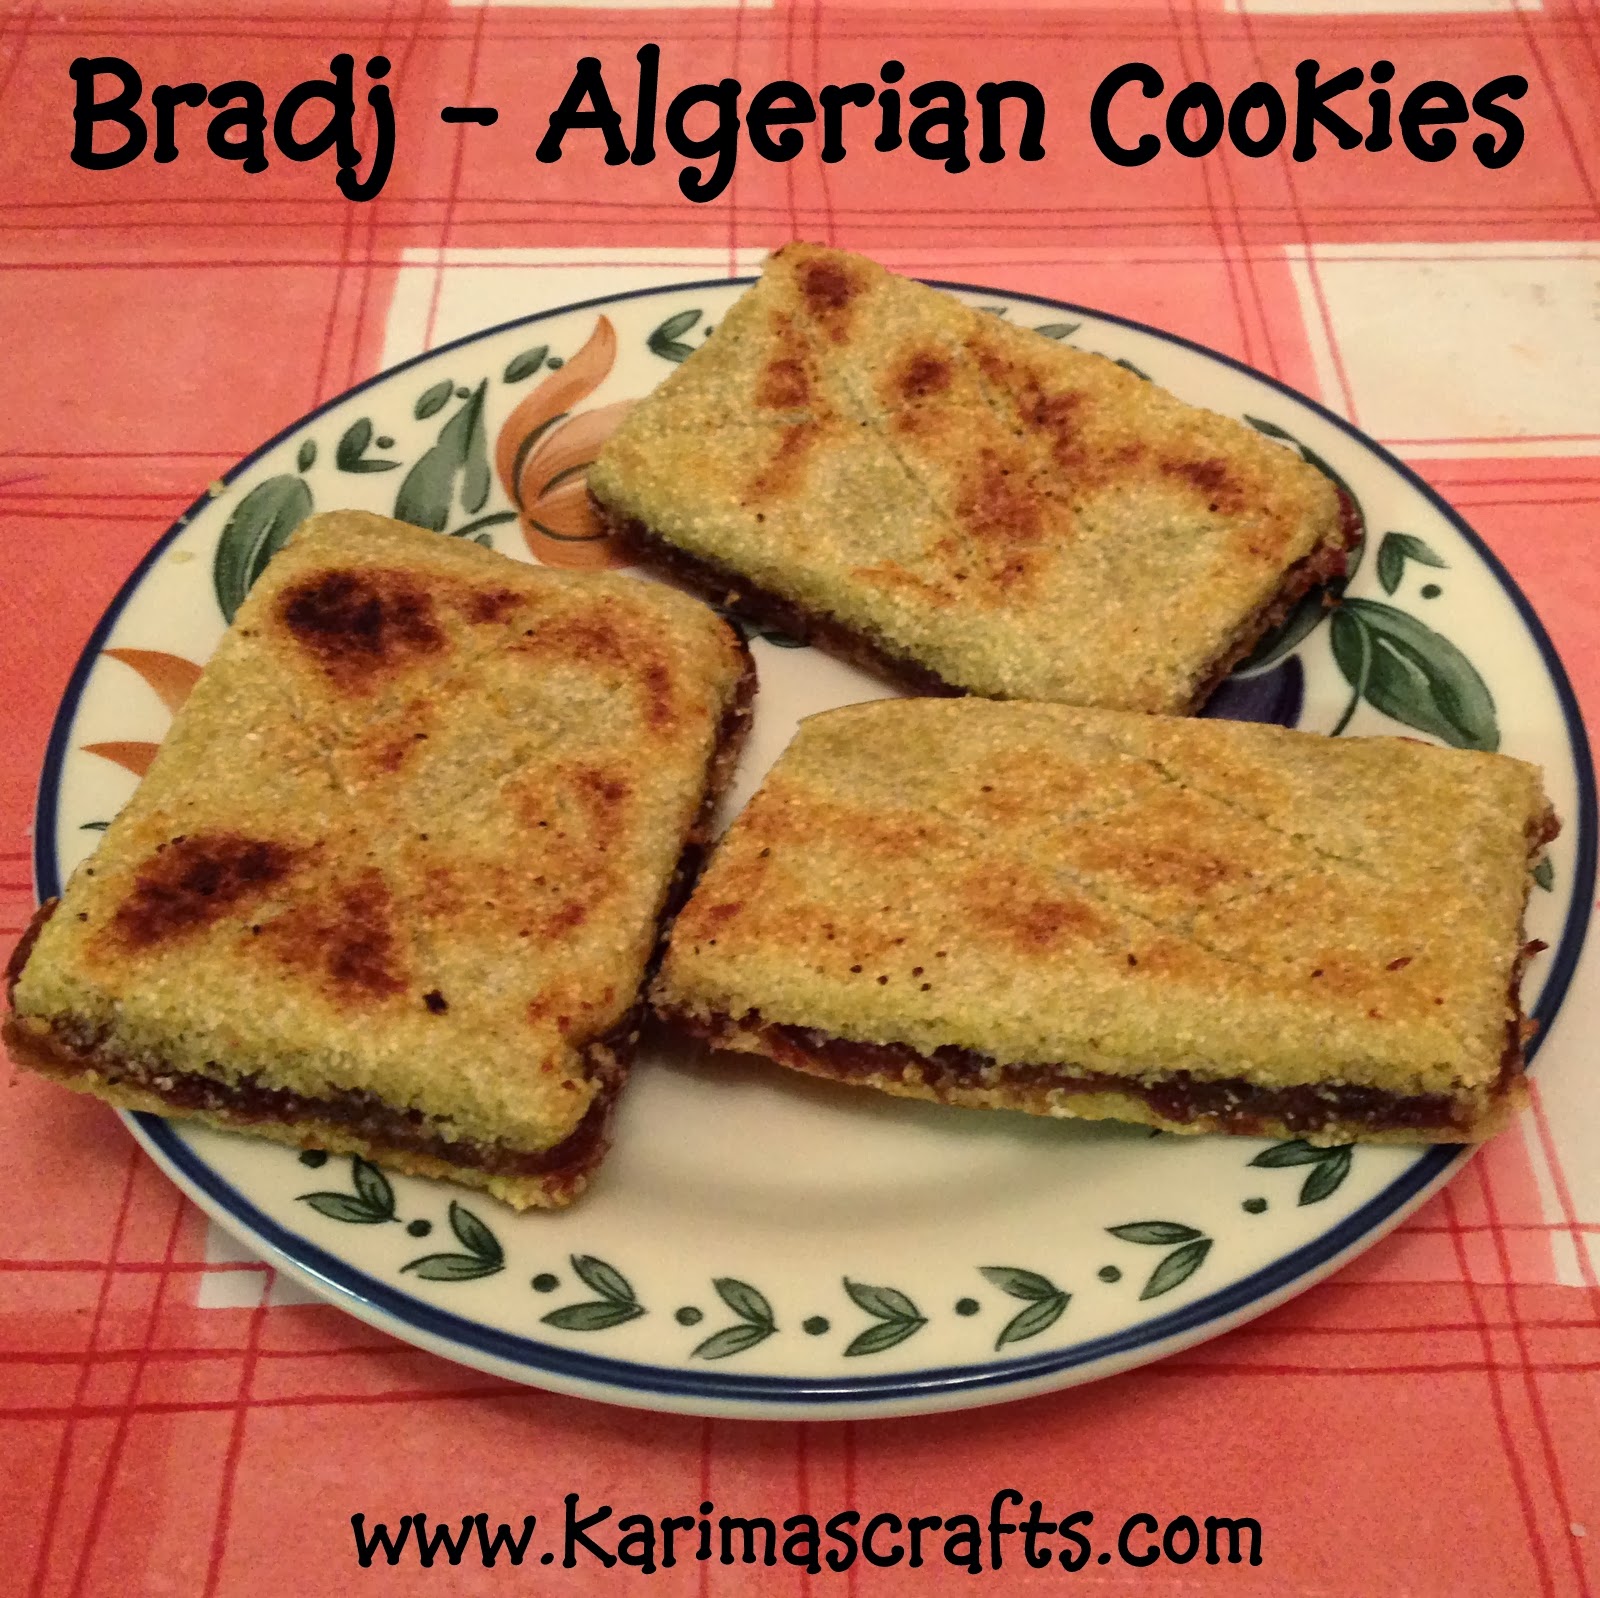 bradj algerian cookies recipe muslim